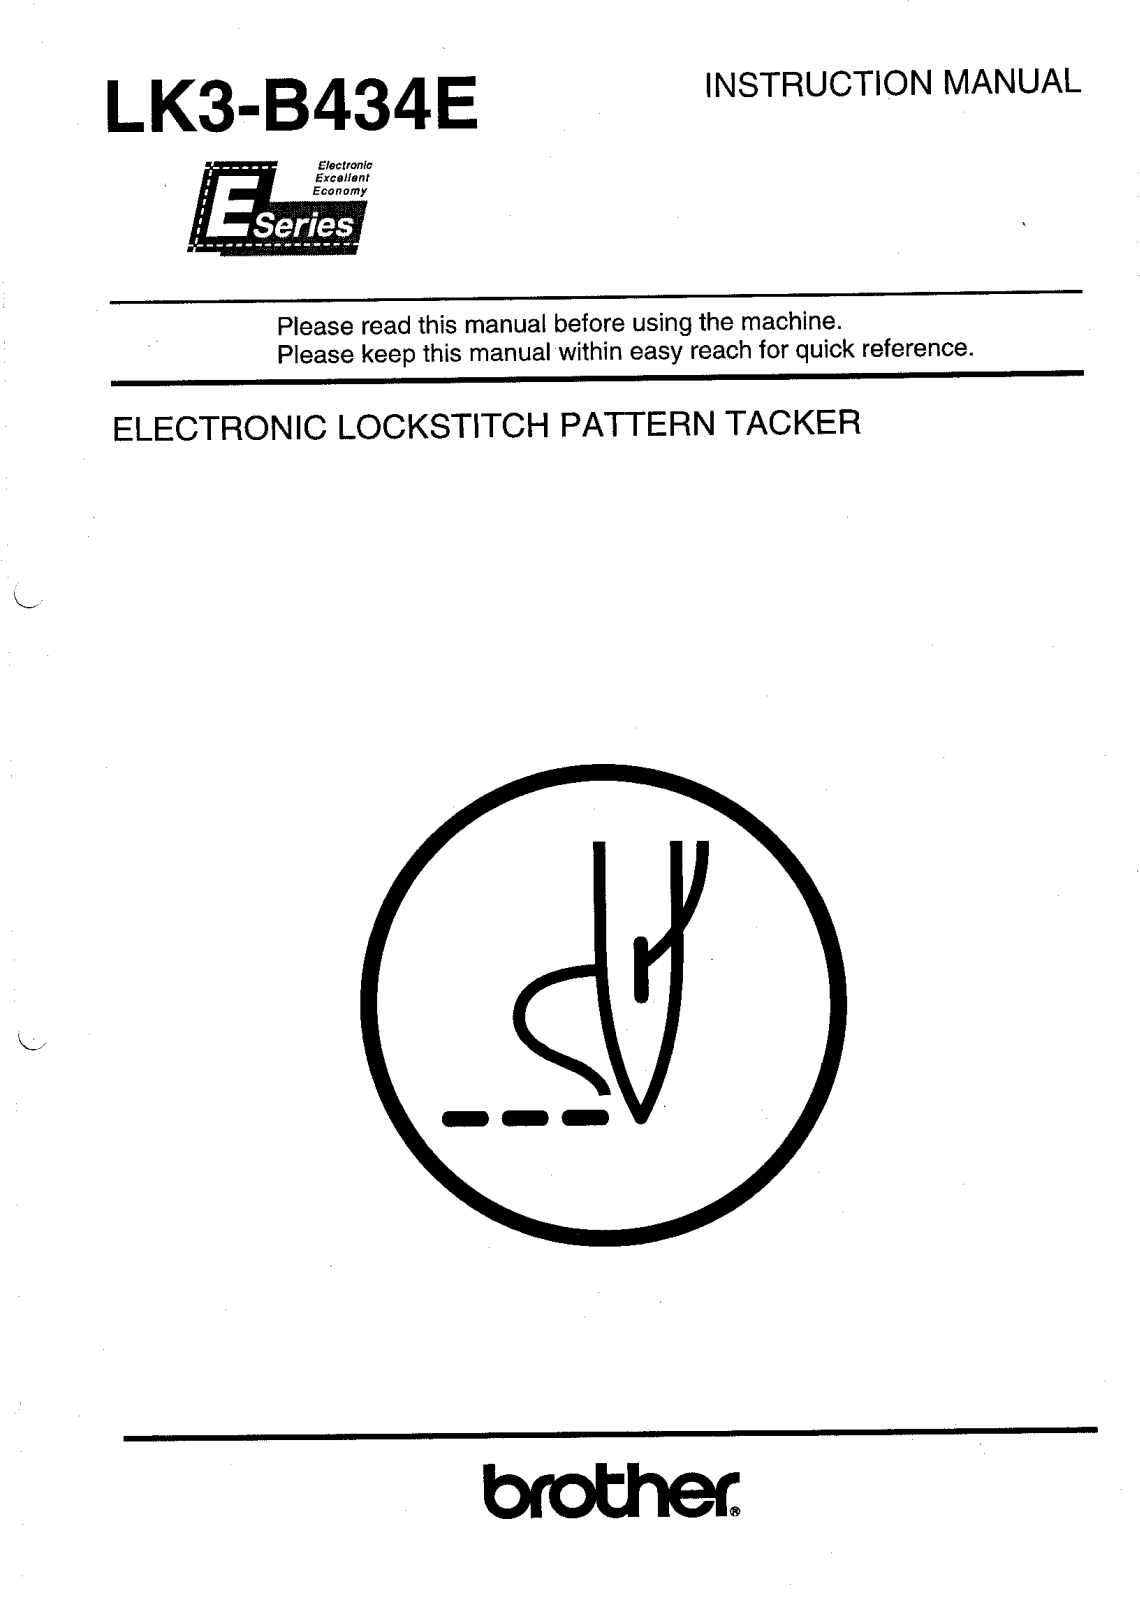 Brother LK3-B434E User Manual